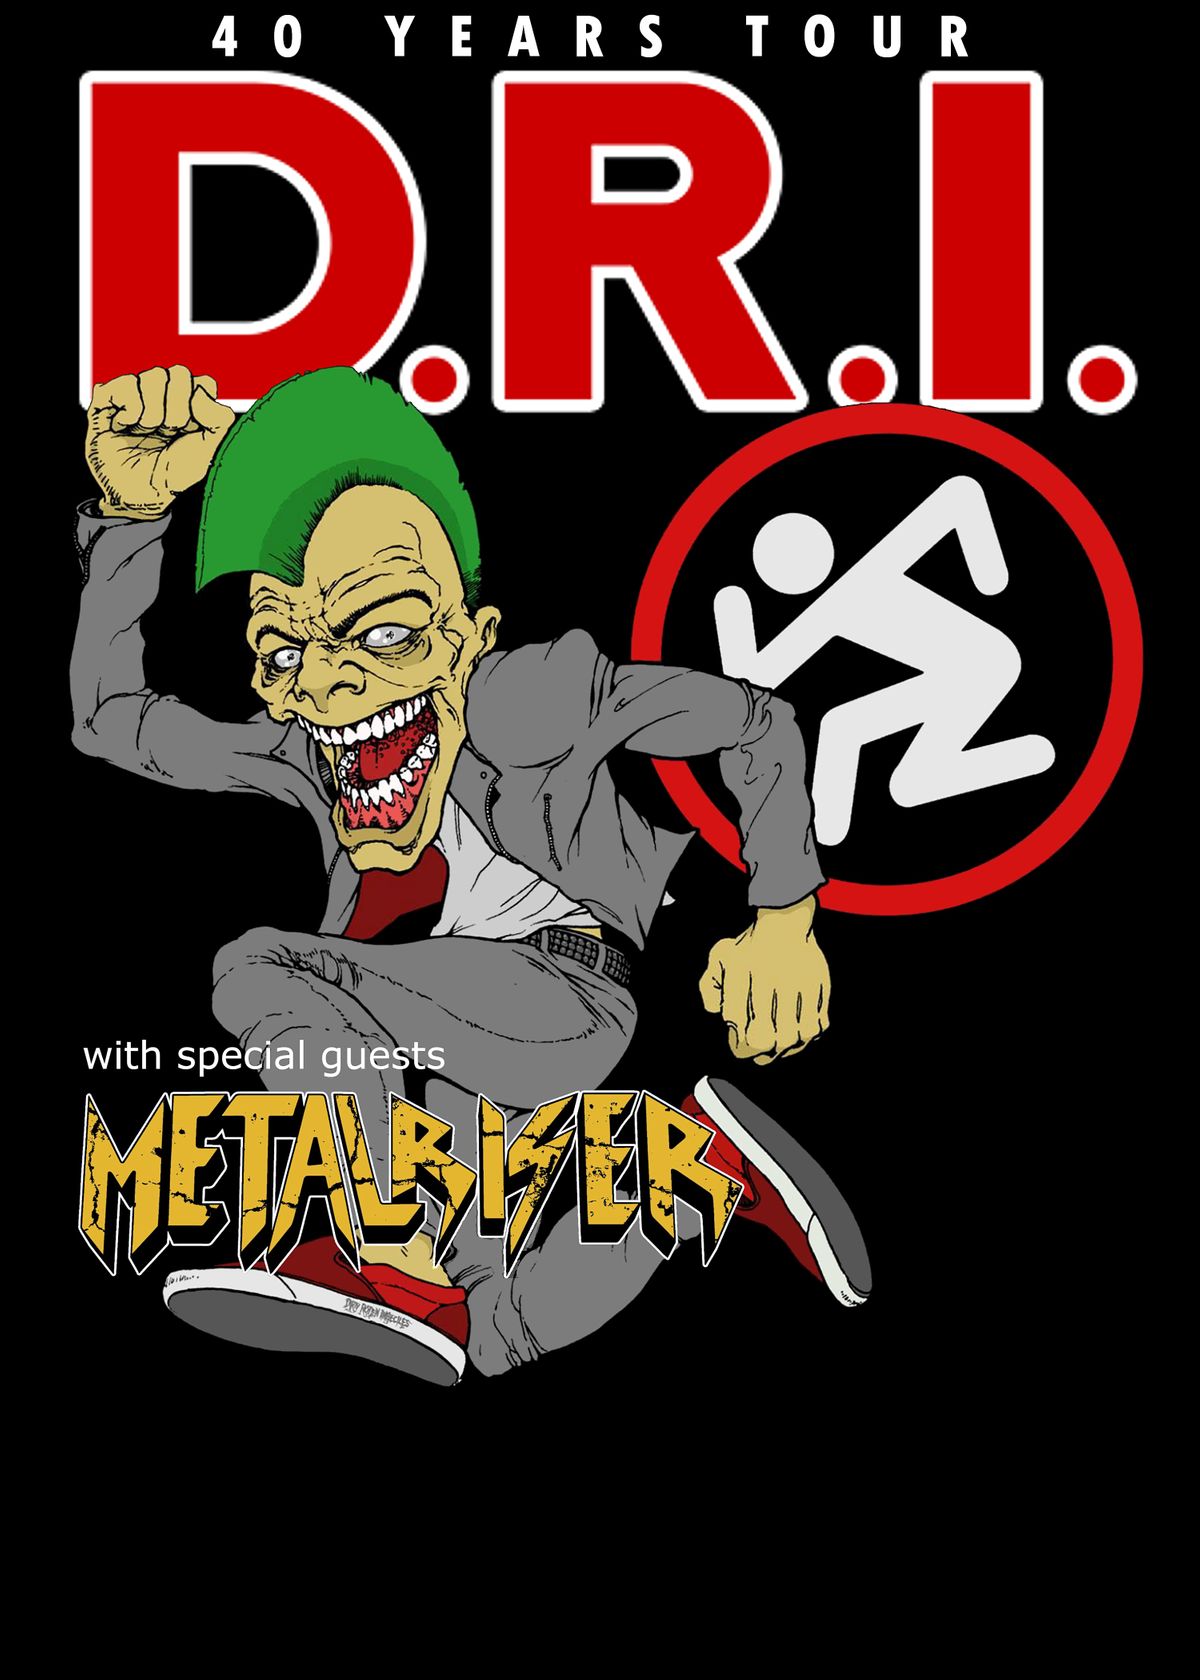 D.R.I.: 40th Anniversary Tour